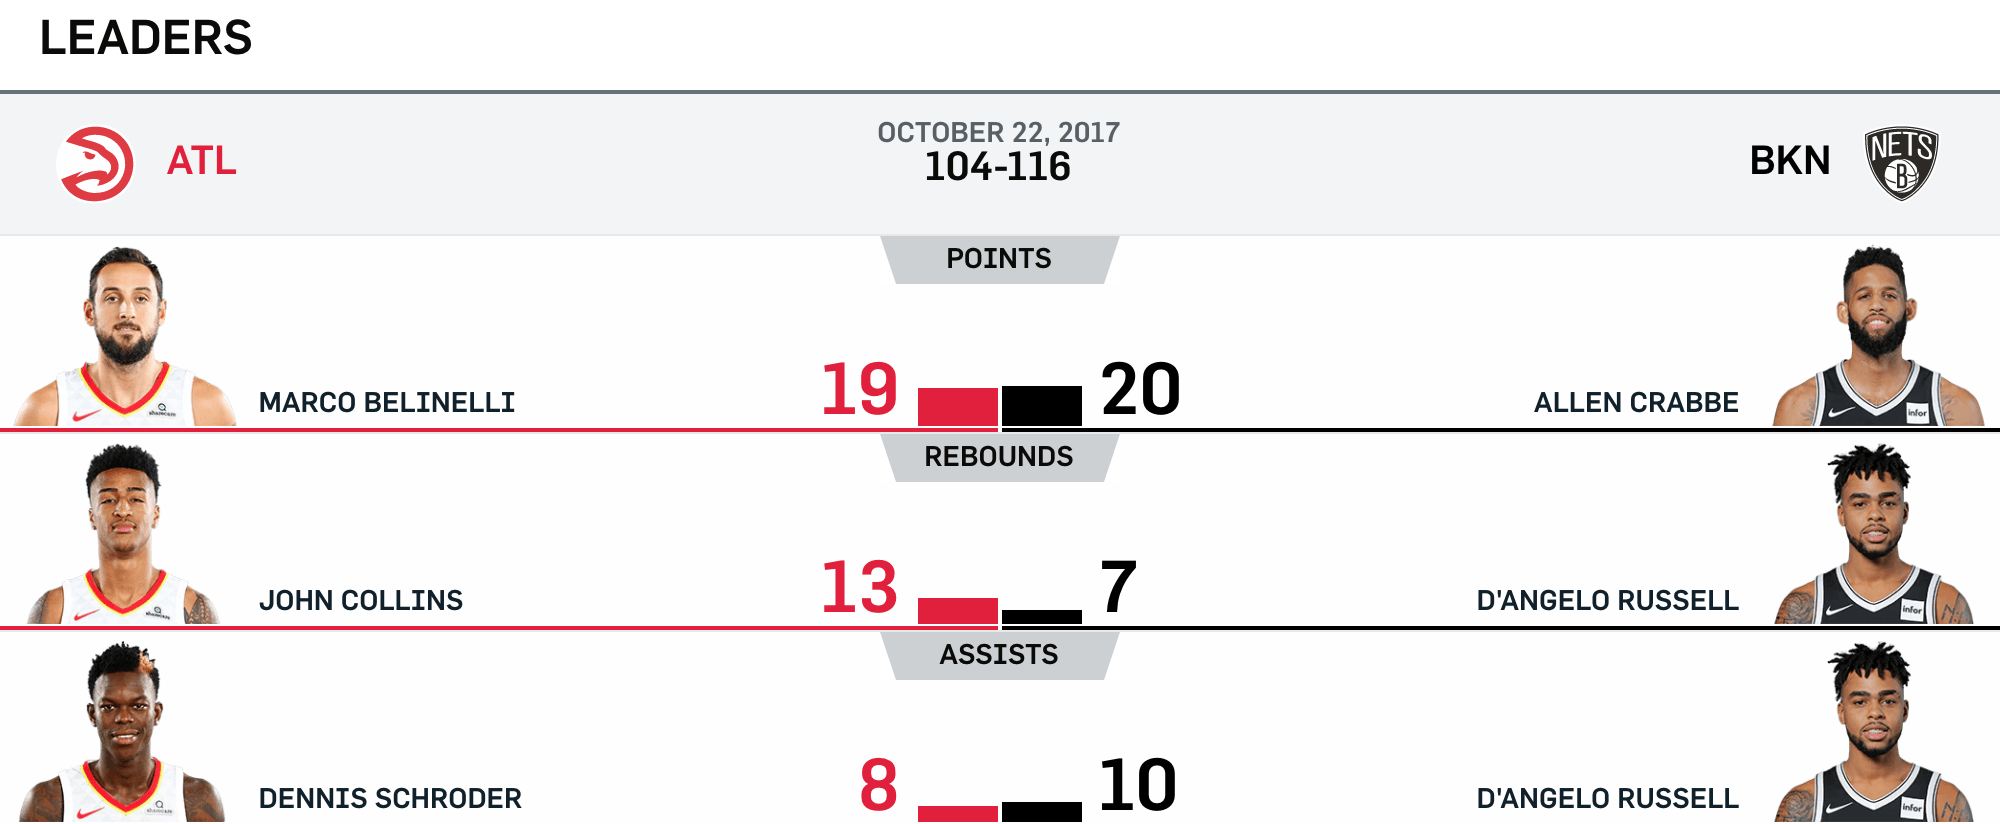 Nets vs Hawks 10-22-17 Leaders